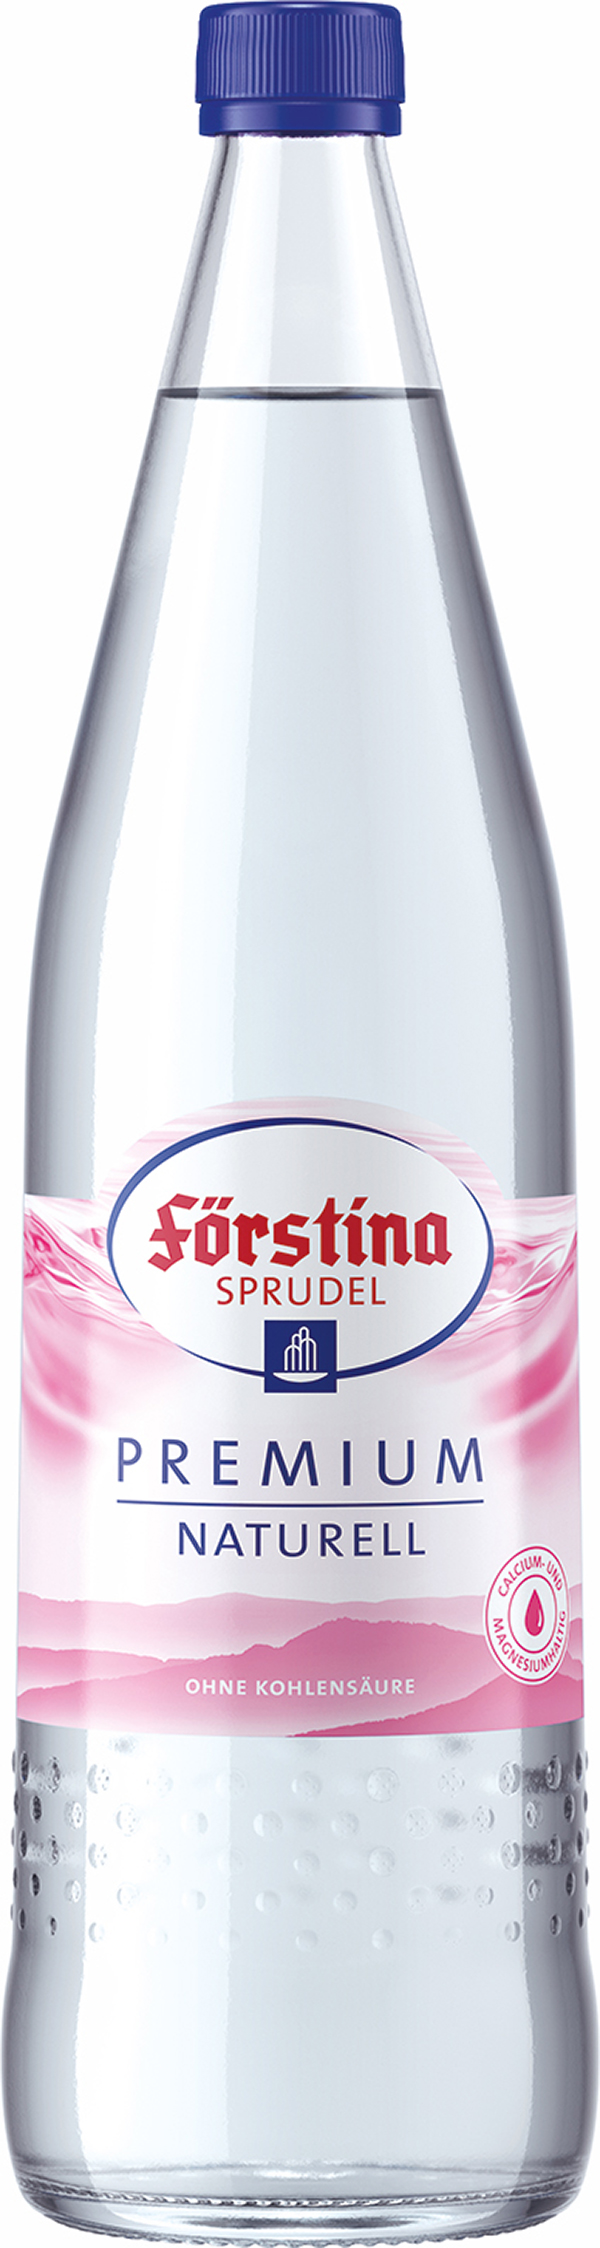 Förstina Sprudel Premium Naturell 12 x 0,7 l (Glas)